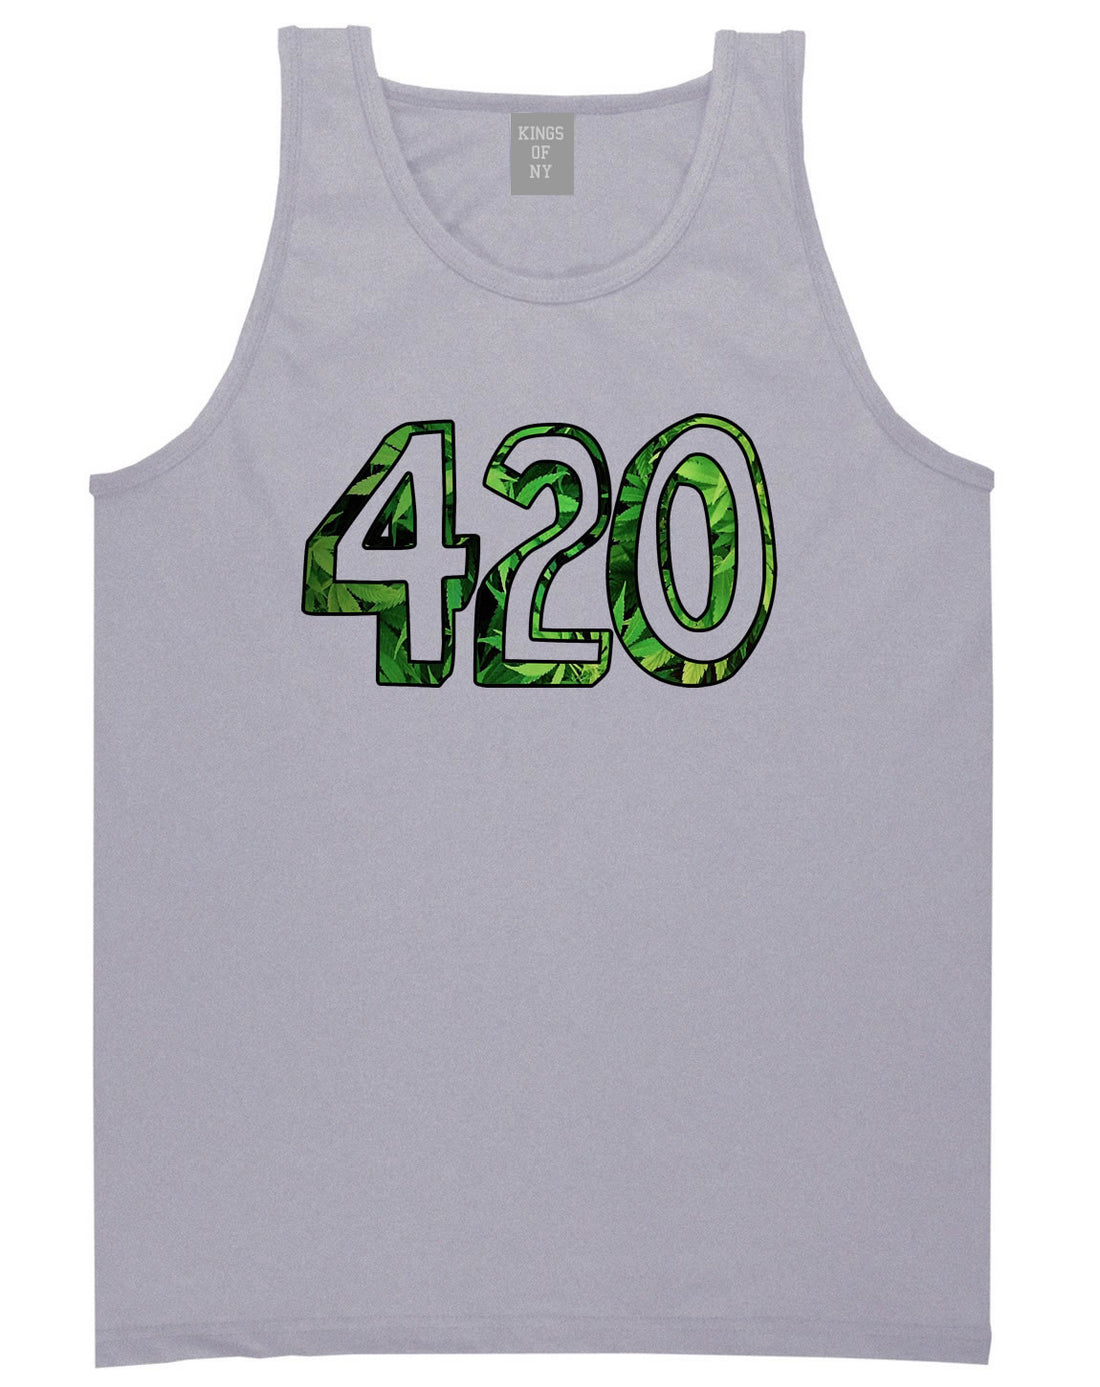  420 Weed Marijuana Print Tank Top in Grey by Kings Of NY